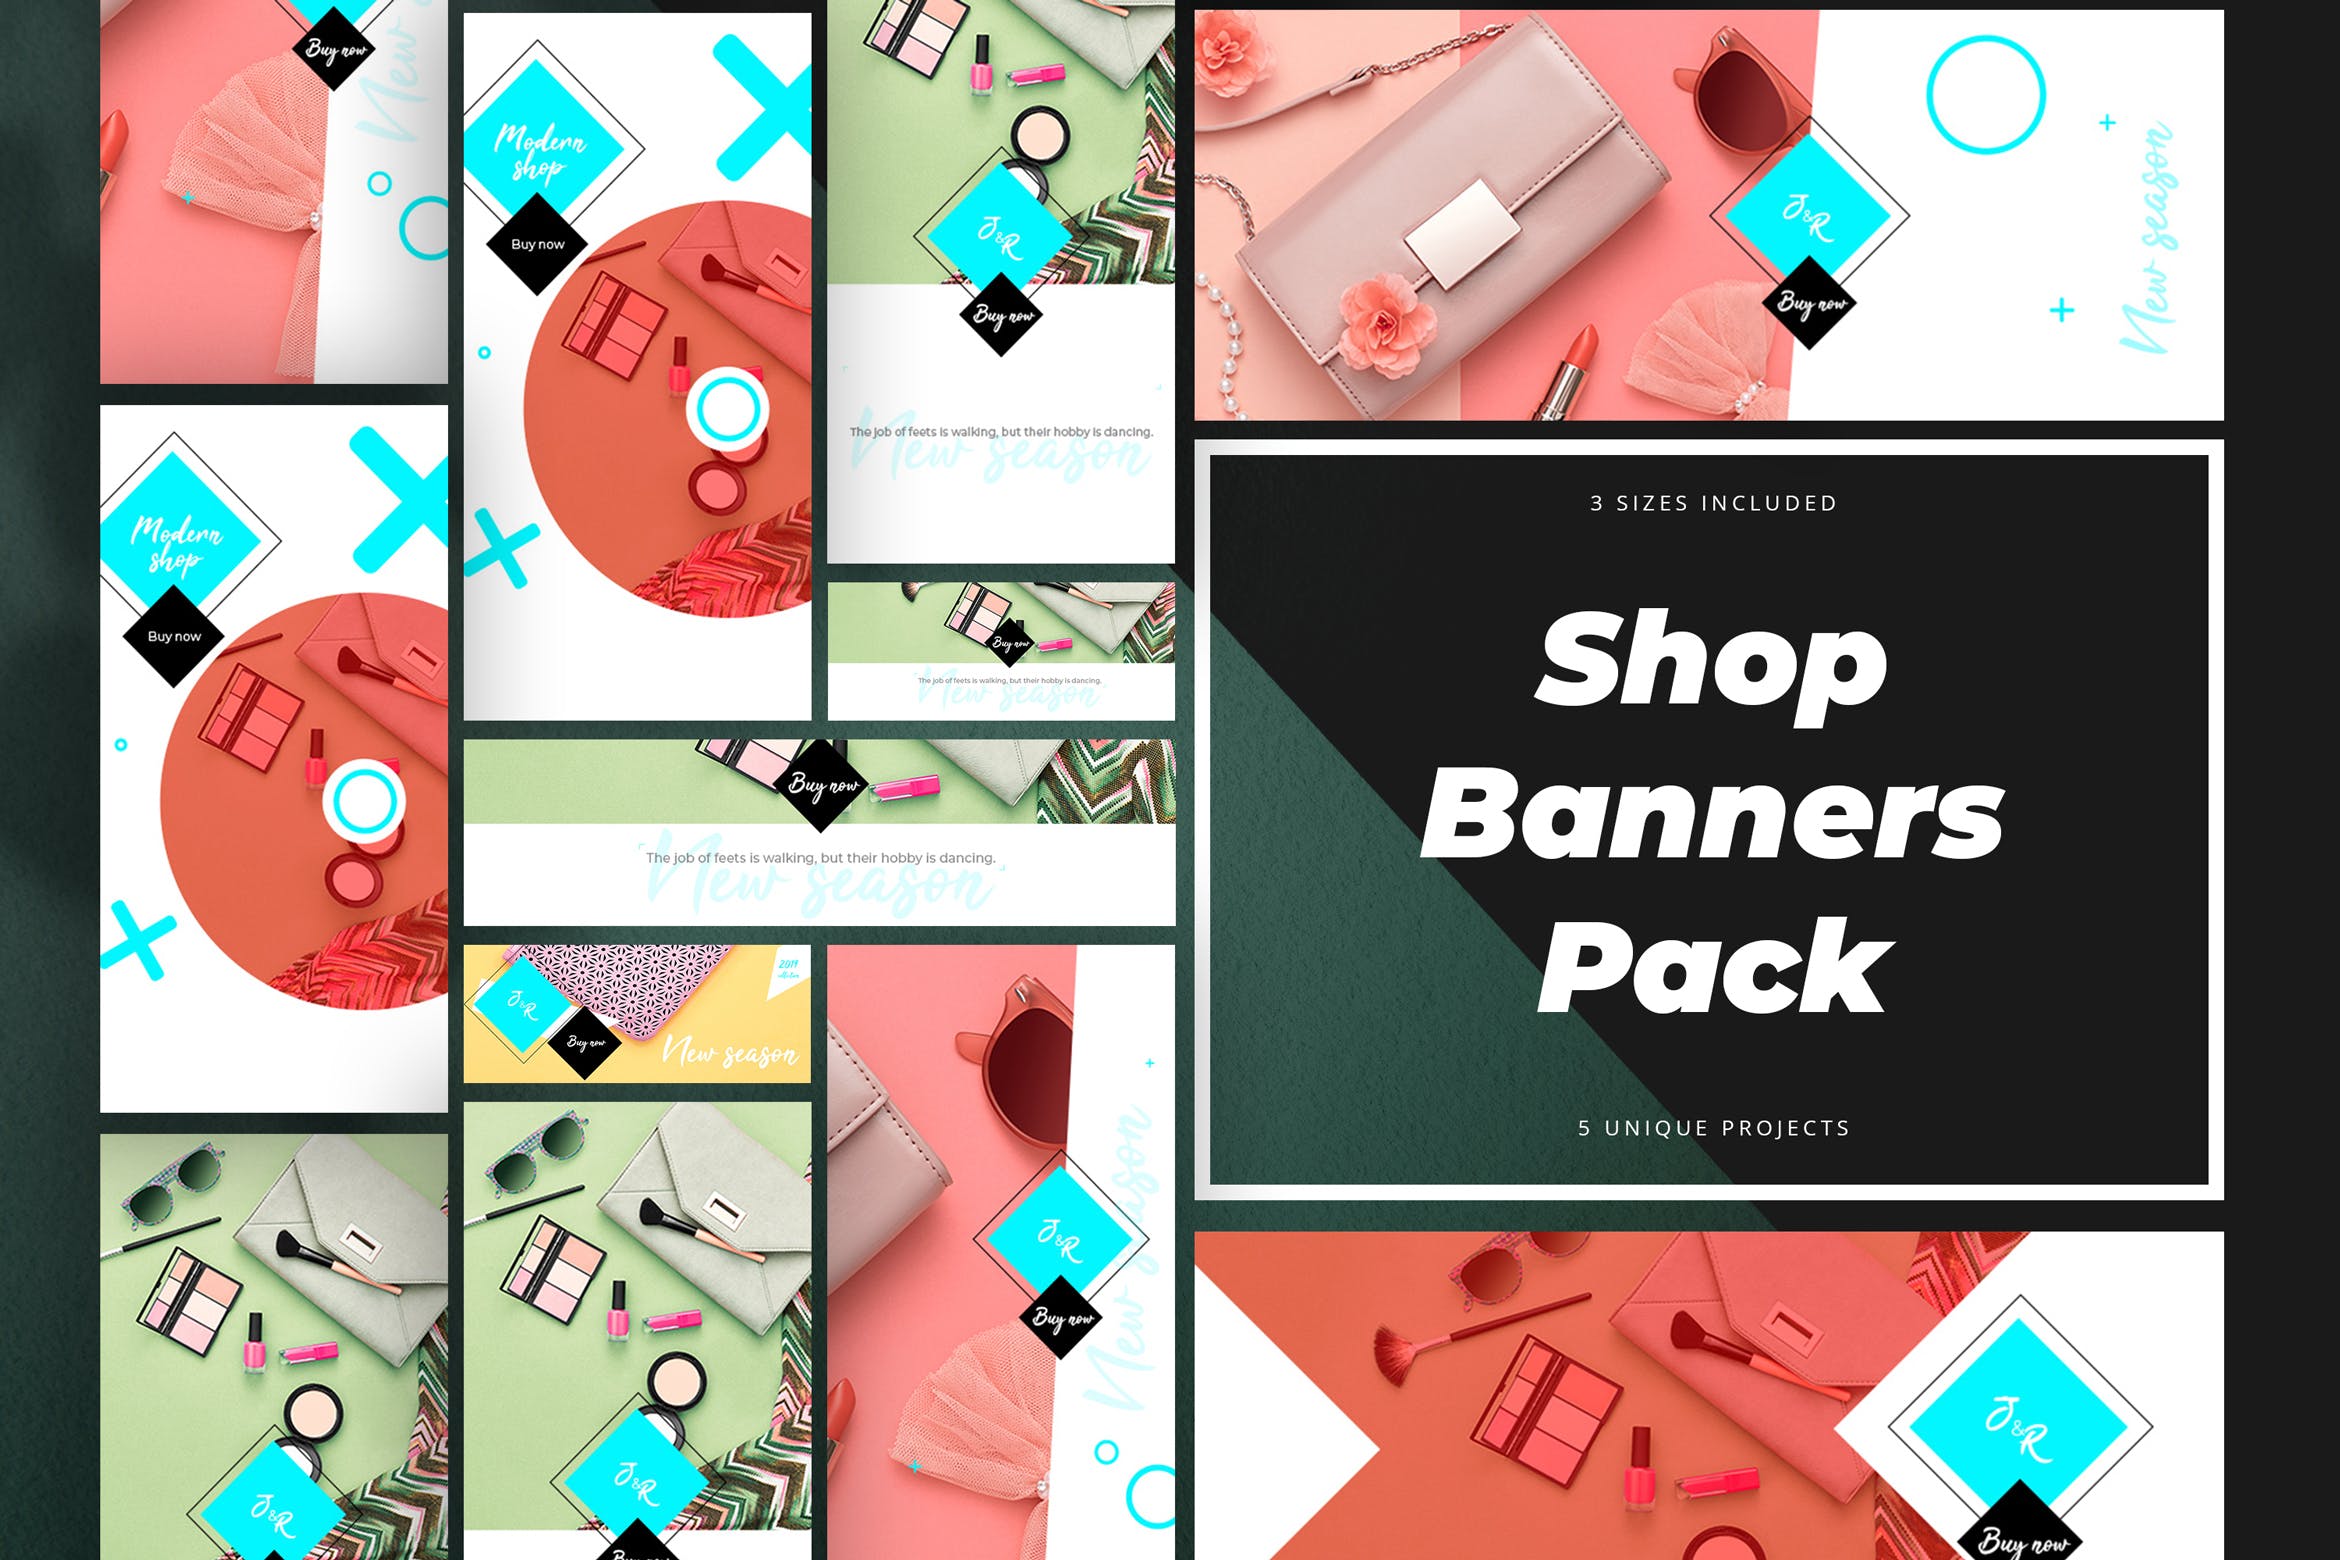 网上商城Banner广告图设计模板 Shop Banners Pack插图